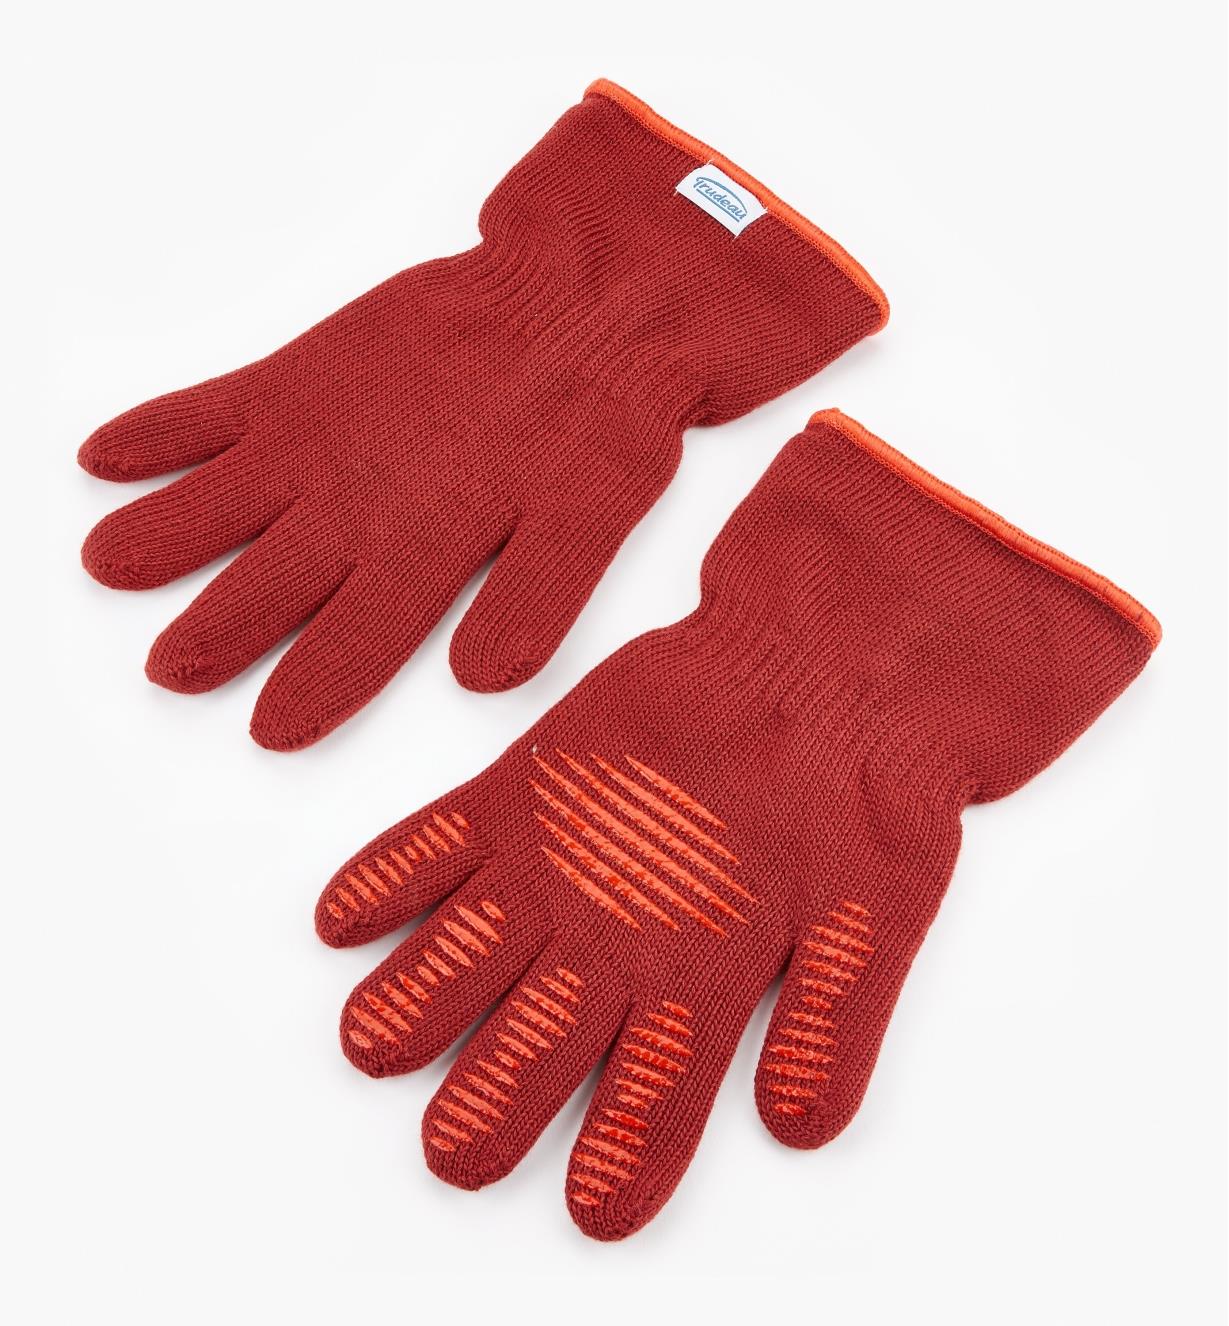 EV273 - Oven Gloves, Medium (size 8 to 9)